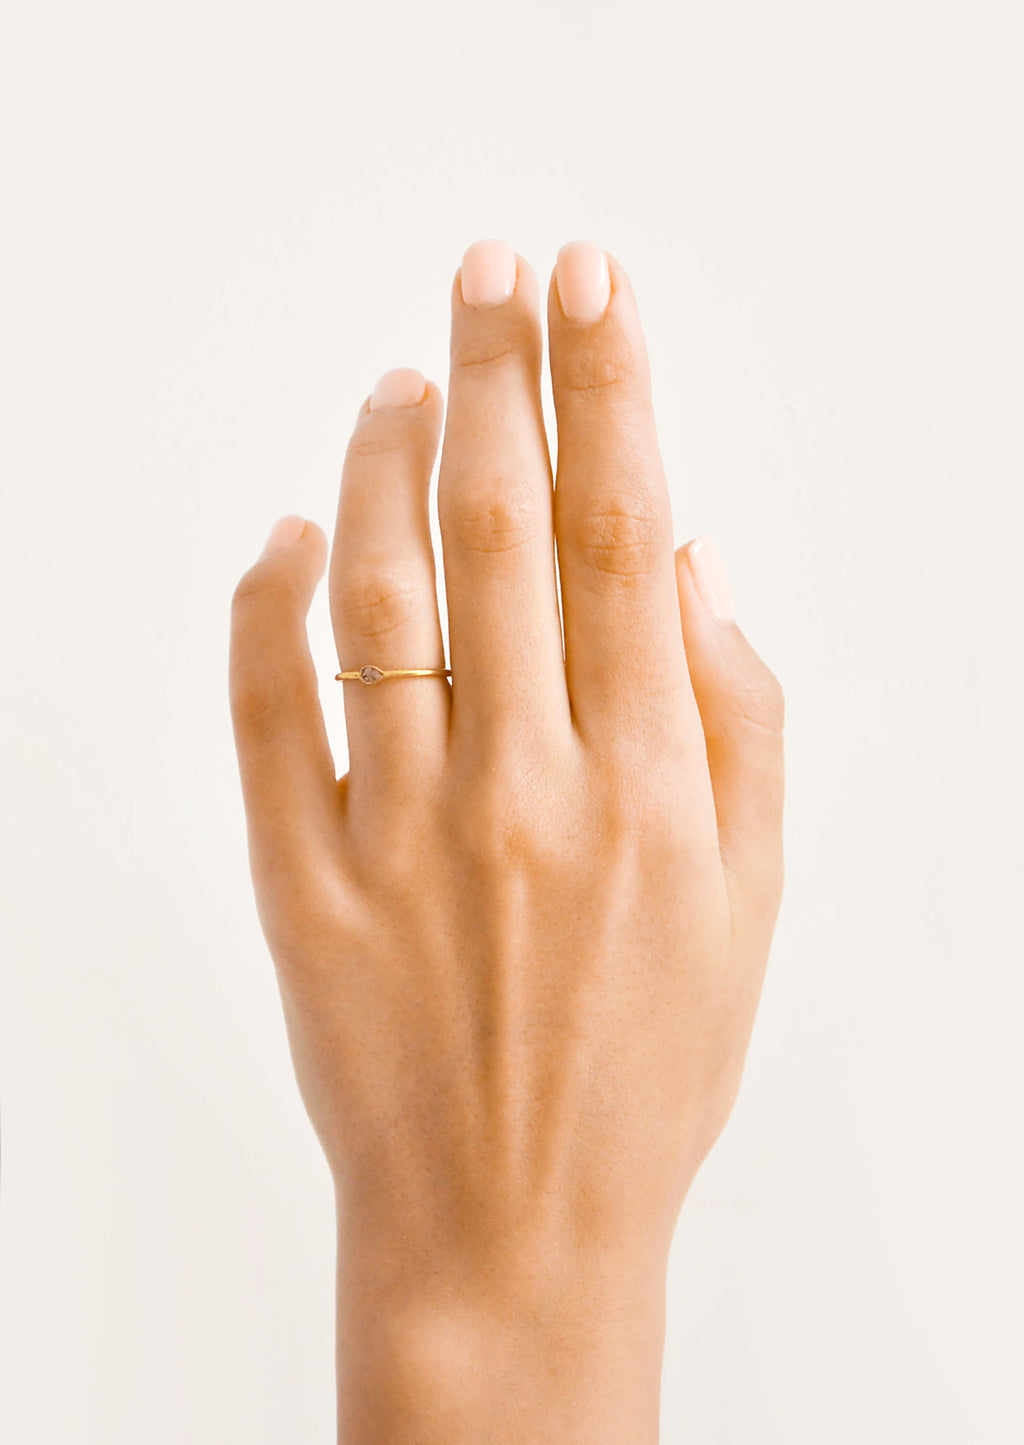 2: Model shot showing hand wearing diamond ring.